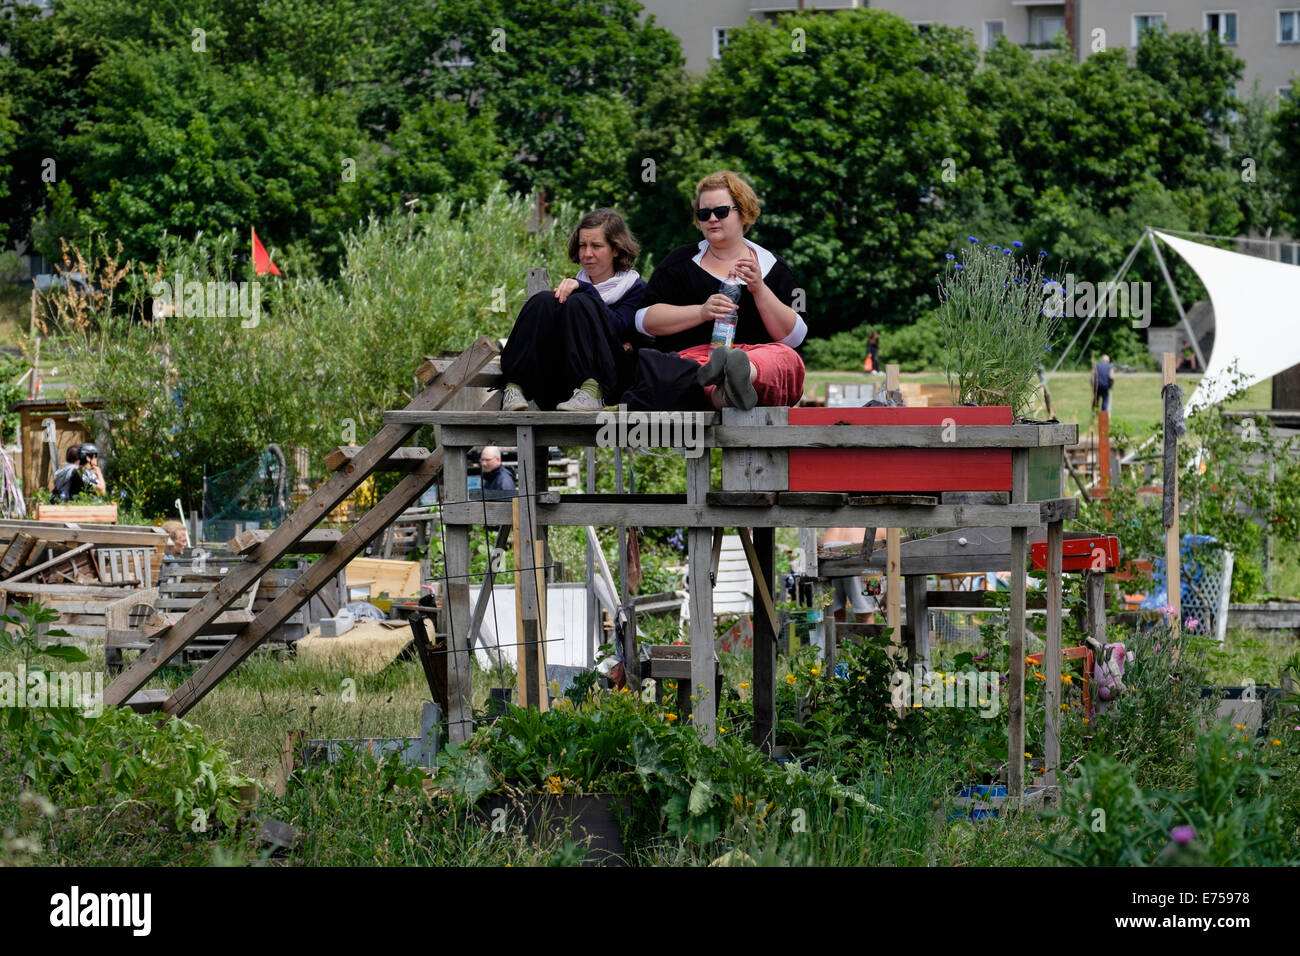 Community garden project at Tempelhof Park former airport in Berlin Germany Stock Photo